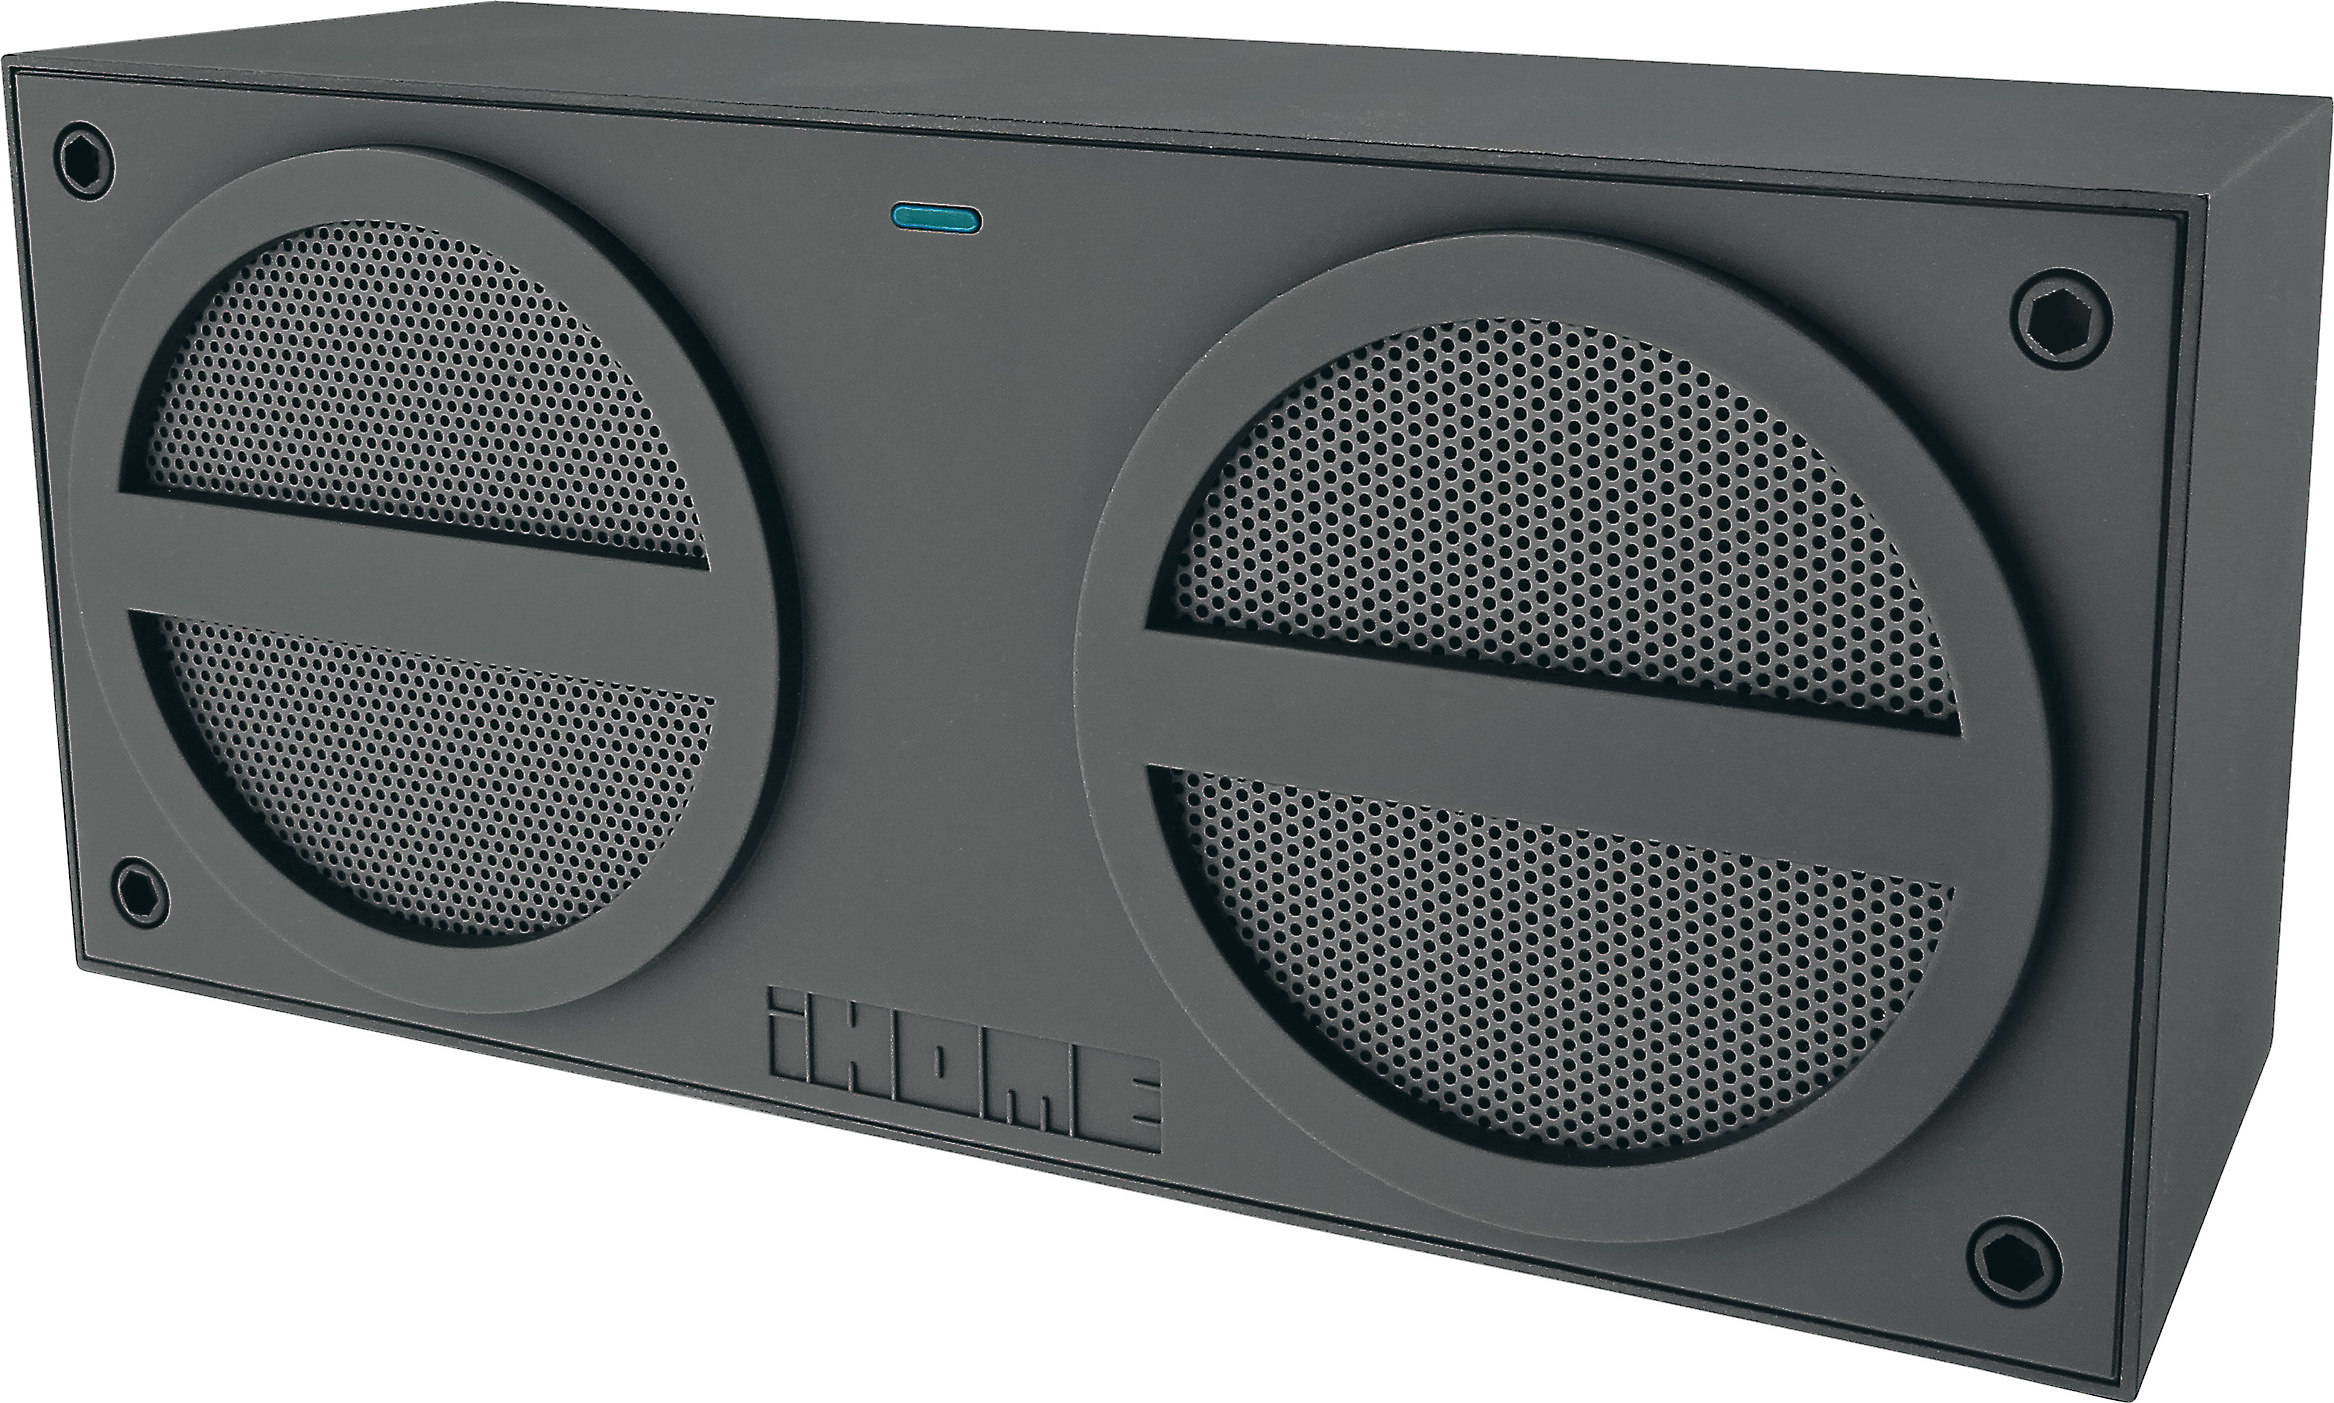 ihome bluetooth speaker price